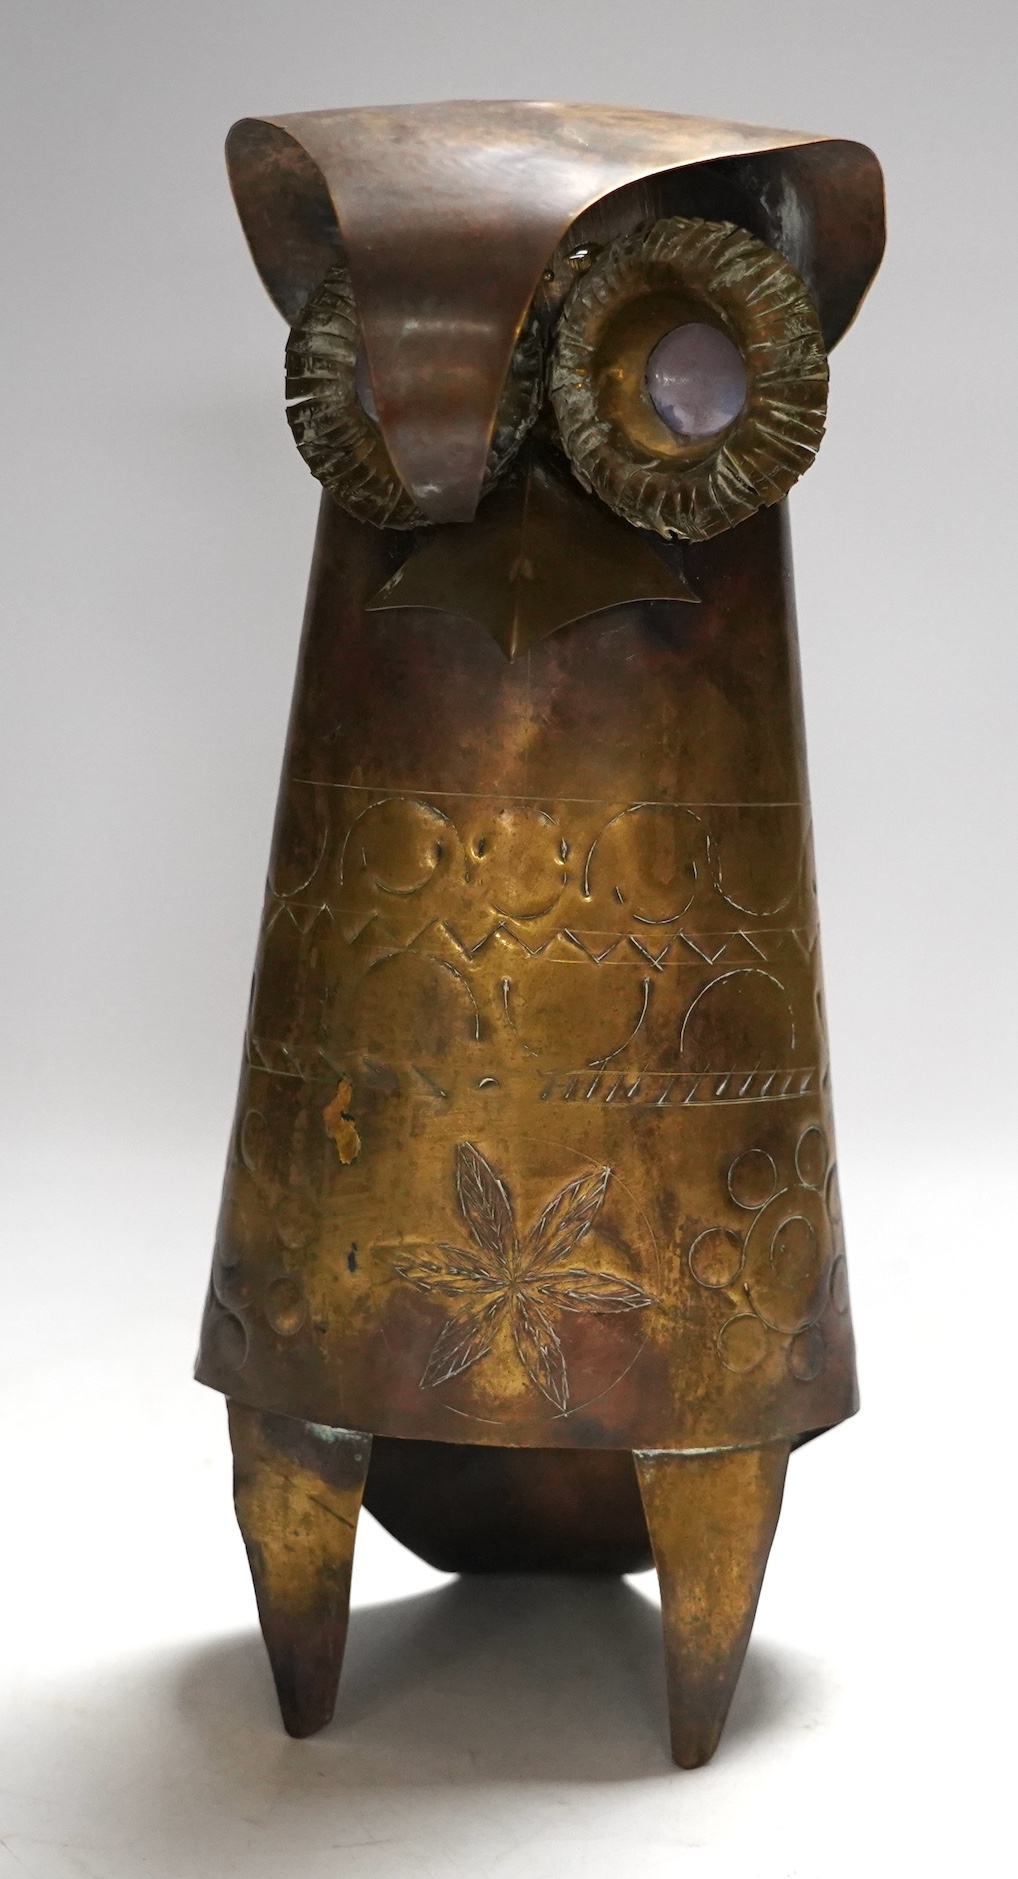 Oswaldo Guayasamin (Ecuadorian, 1919-1999), brass sculpture of an owl with cabochon set eyes, signed verso, 31cm high